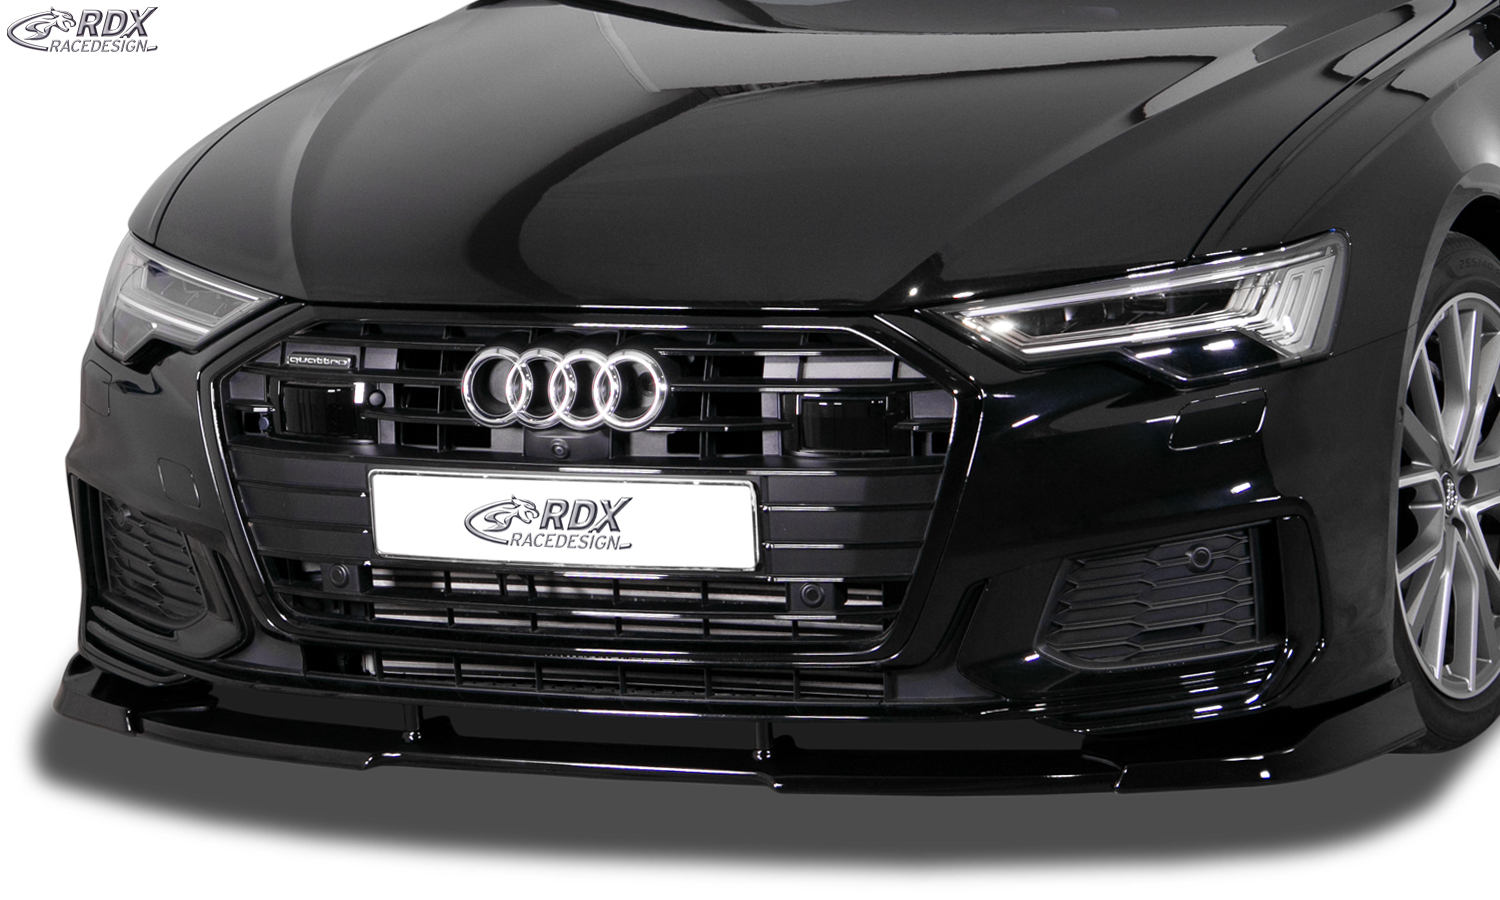 Audi A6 Mk3 (C6,4F) '04-'11: RDX Front Spoiler VARIO-X for AUDI A6 4F  2008-2011 Front Lip Splitter